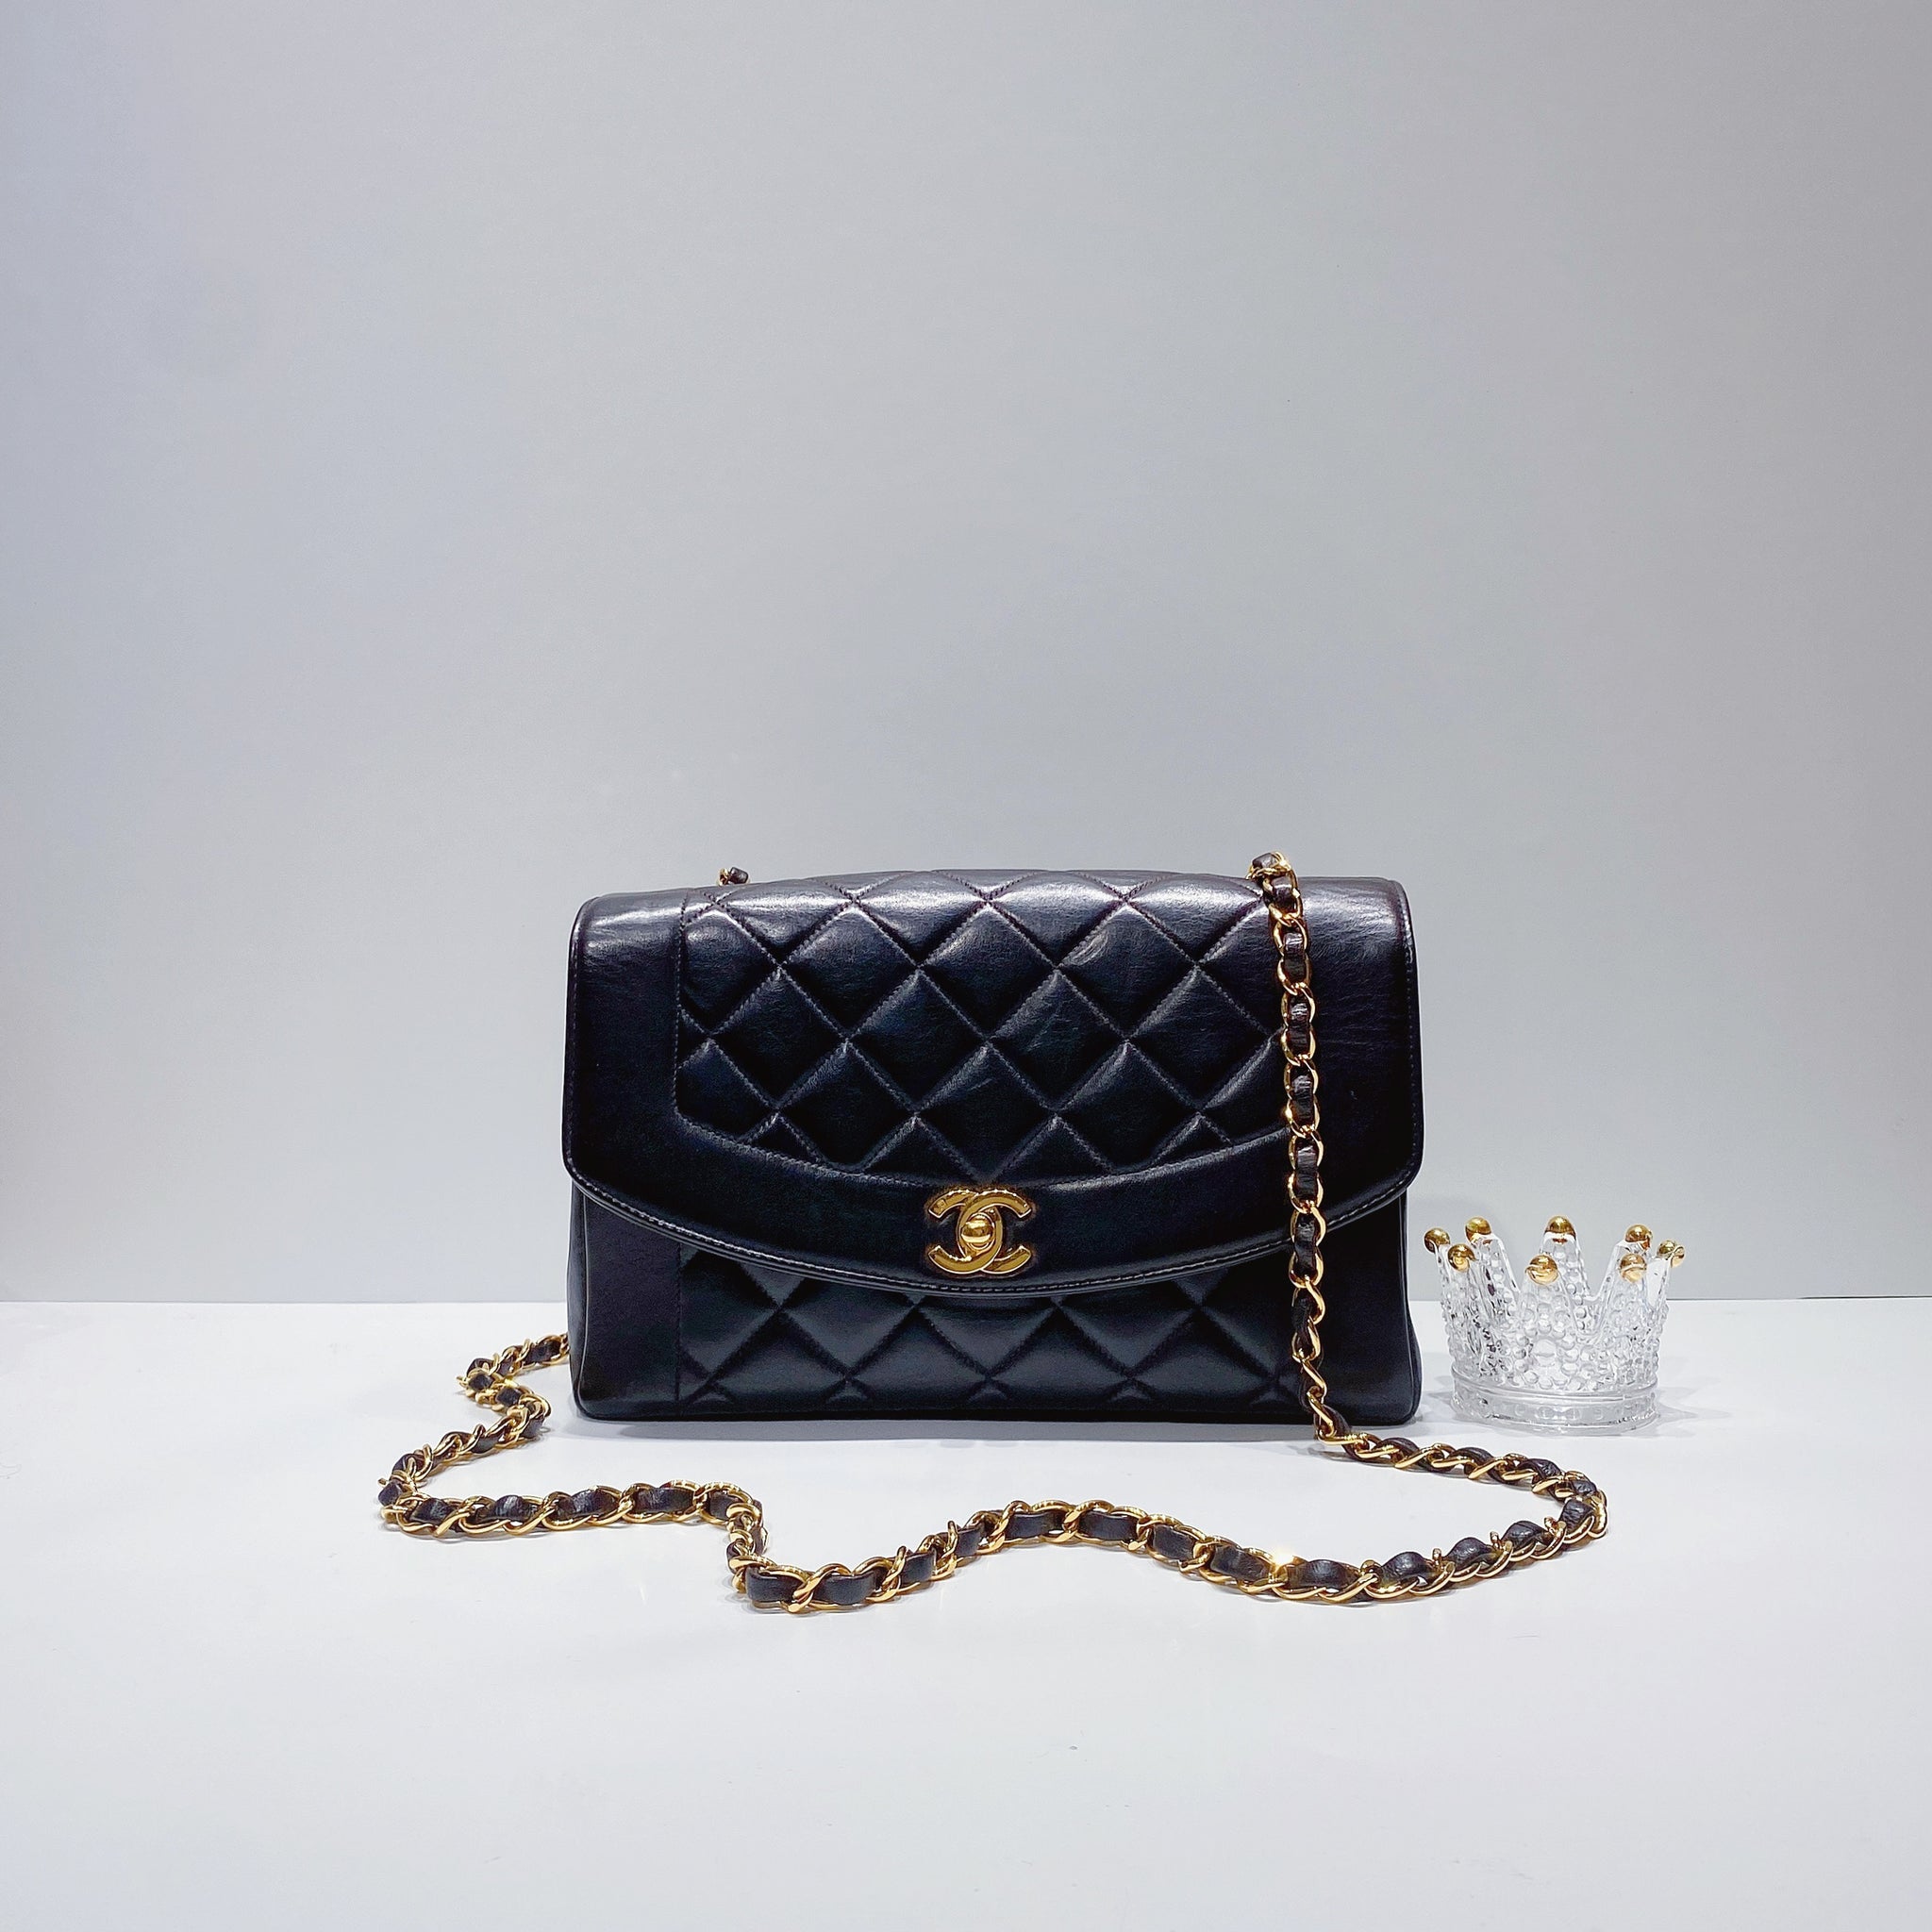 Chanel Caviar Skin Diana Flap Chain Bag 25cm Red